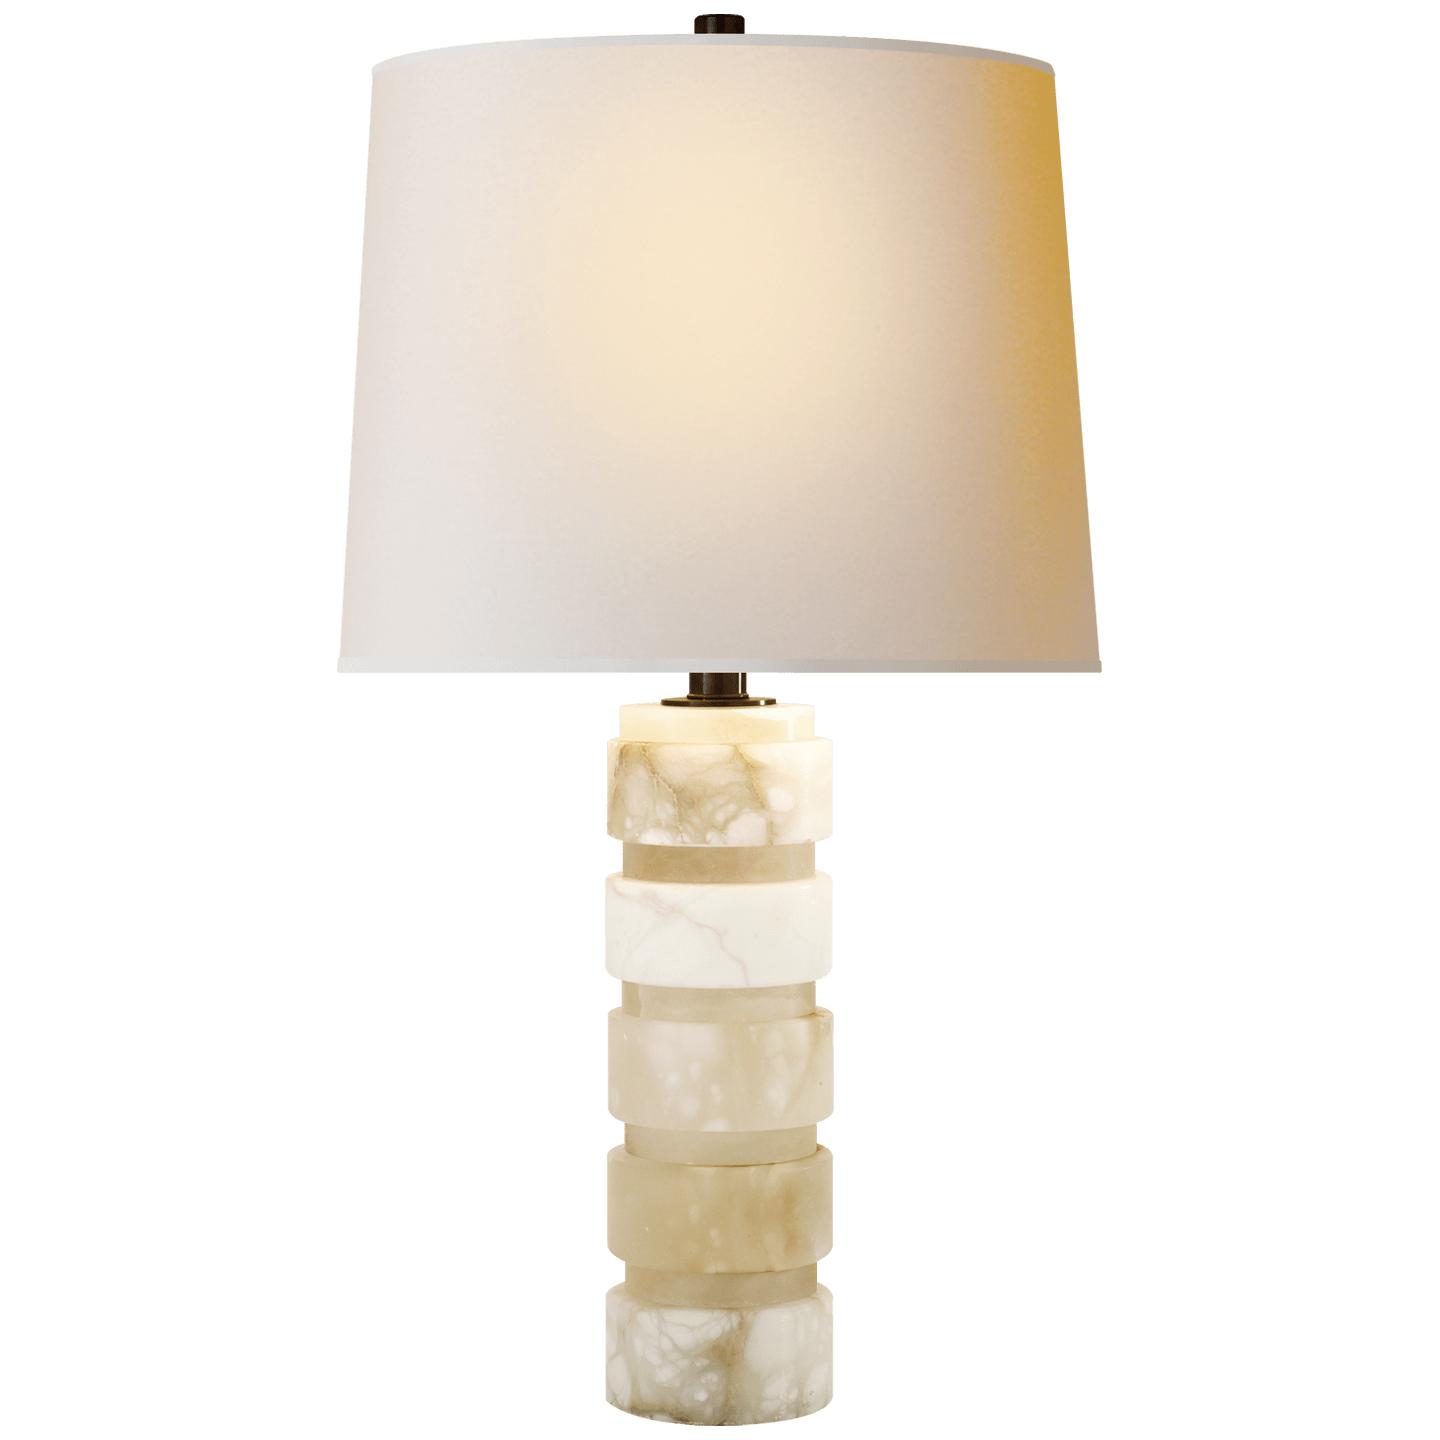 Купить Настольная лампа Round Chunky Stacked Table Lamp в интернет-магазине roooms.ru